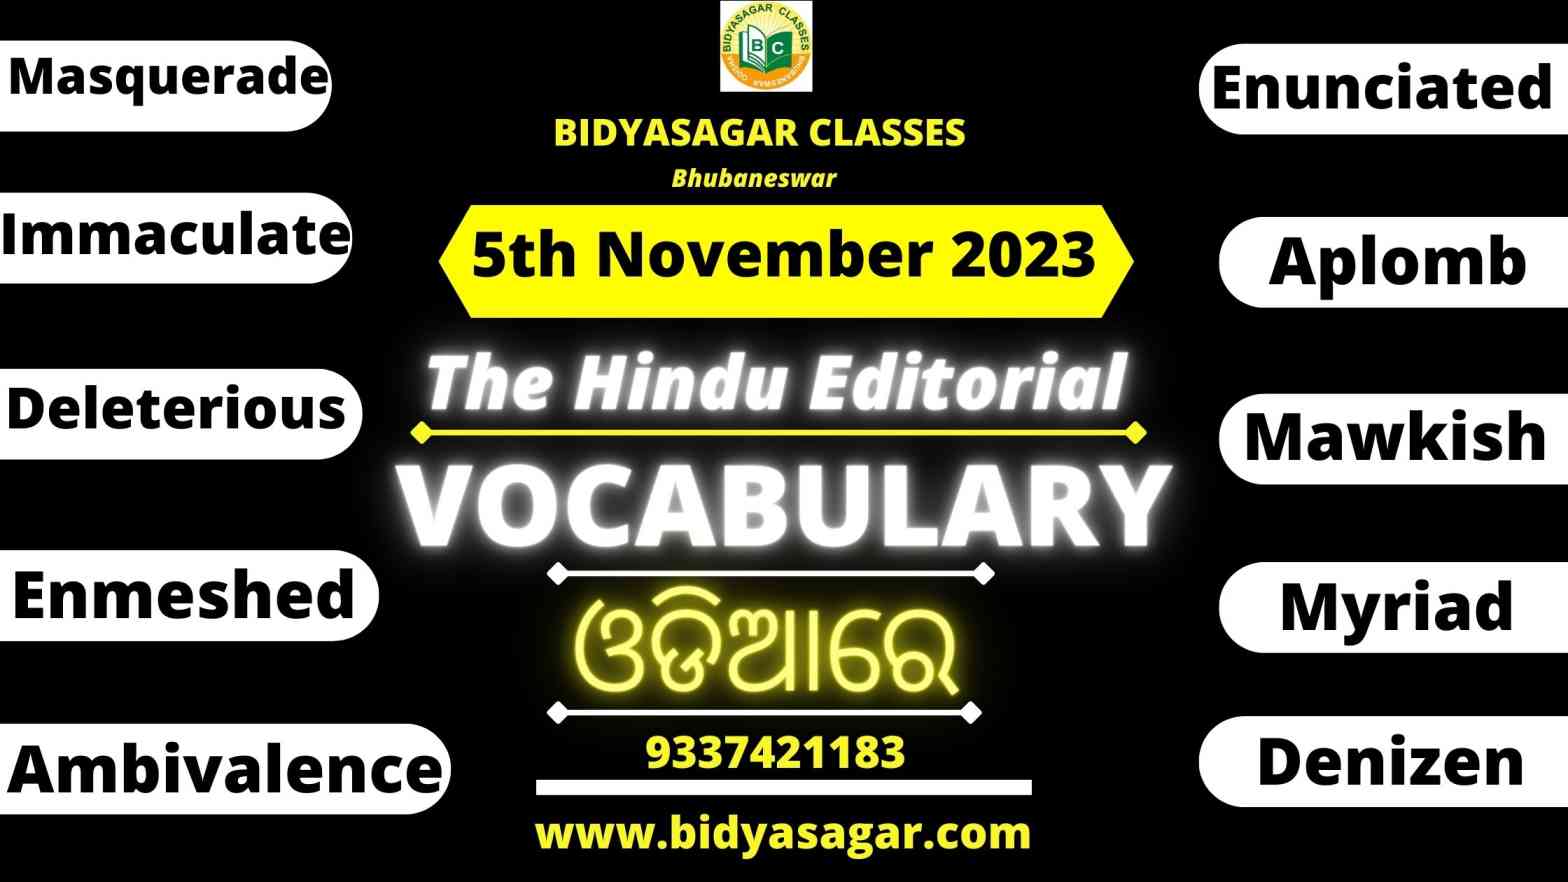 The Hindu Editorial Vocabulary of 5th November 2023